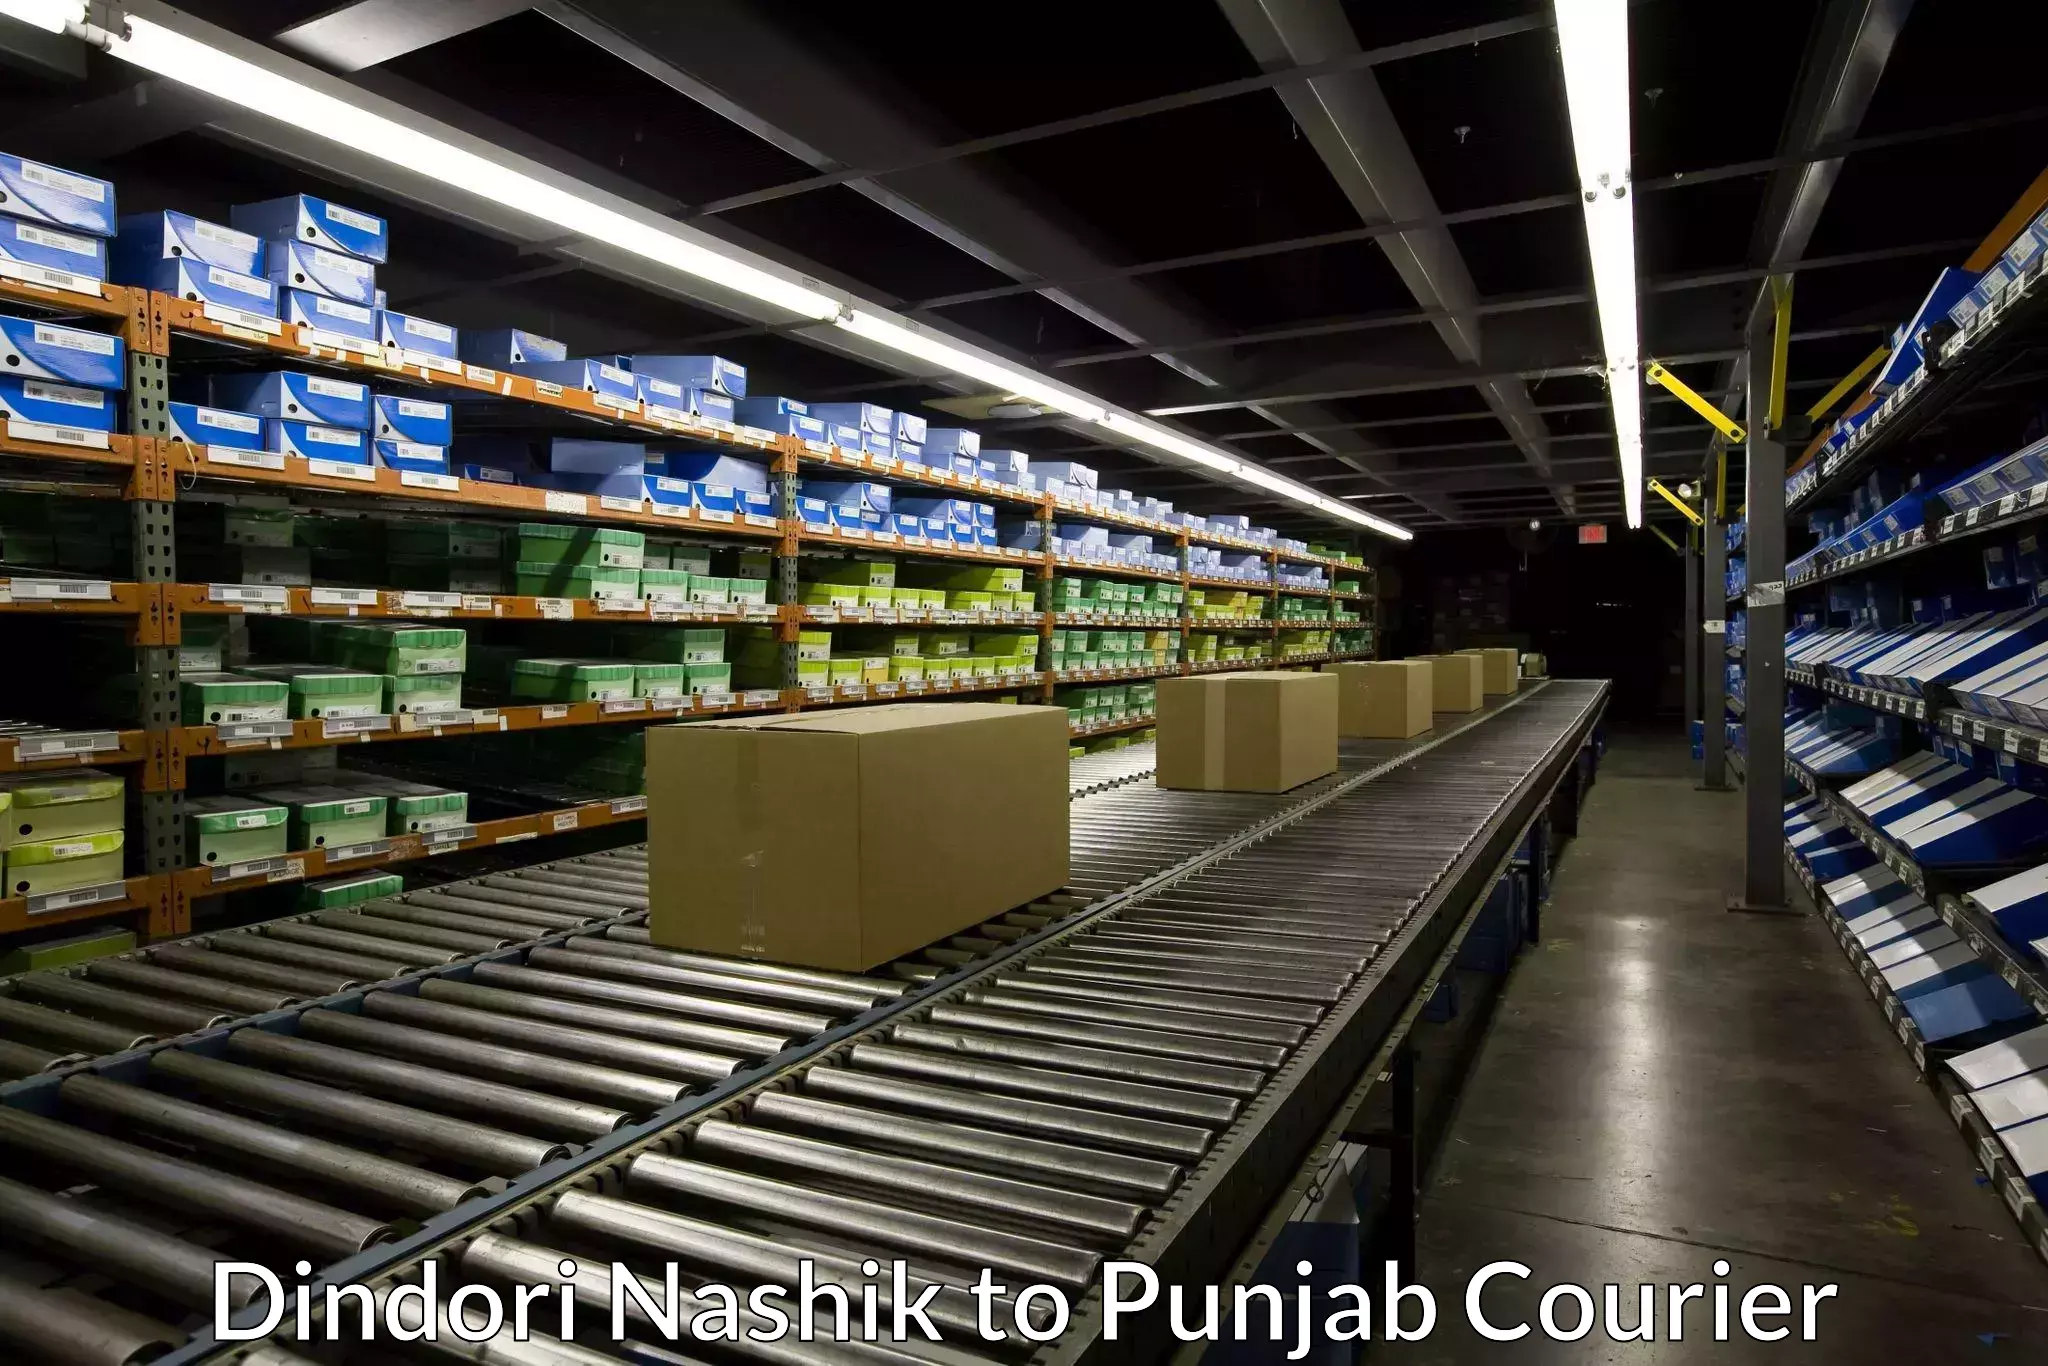 Logistics service provider Dindori Nashik to Punjab